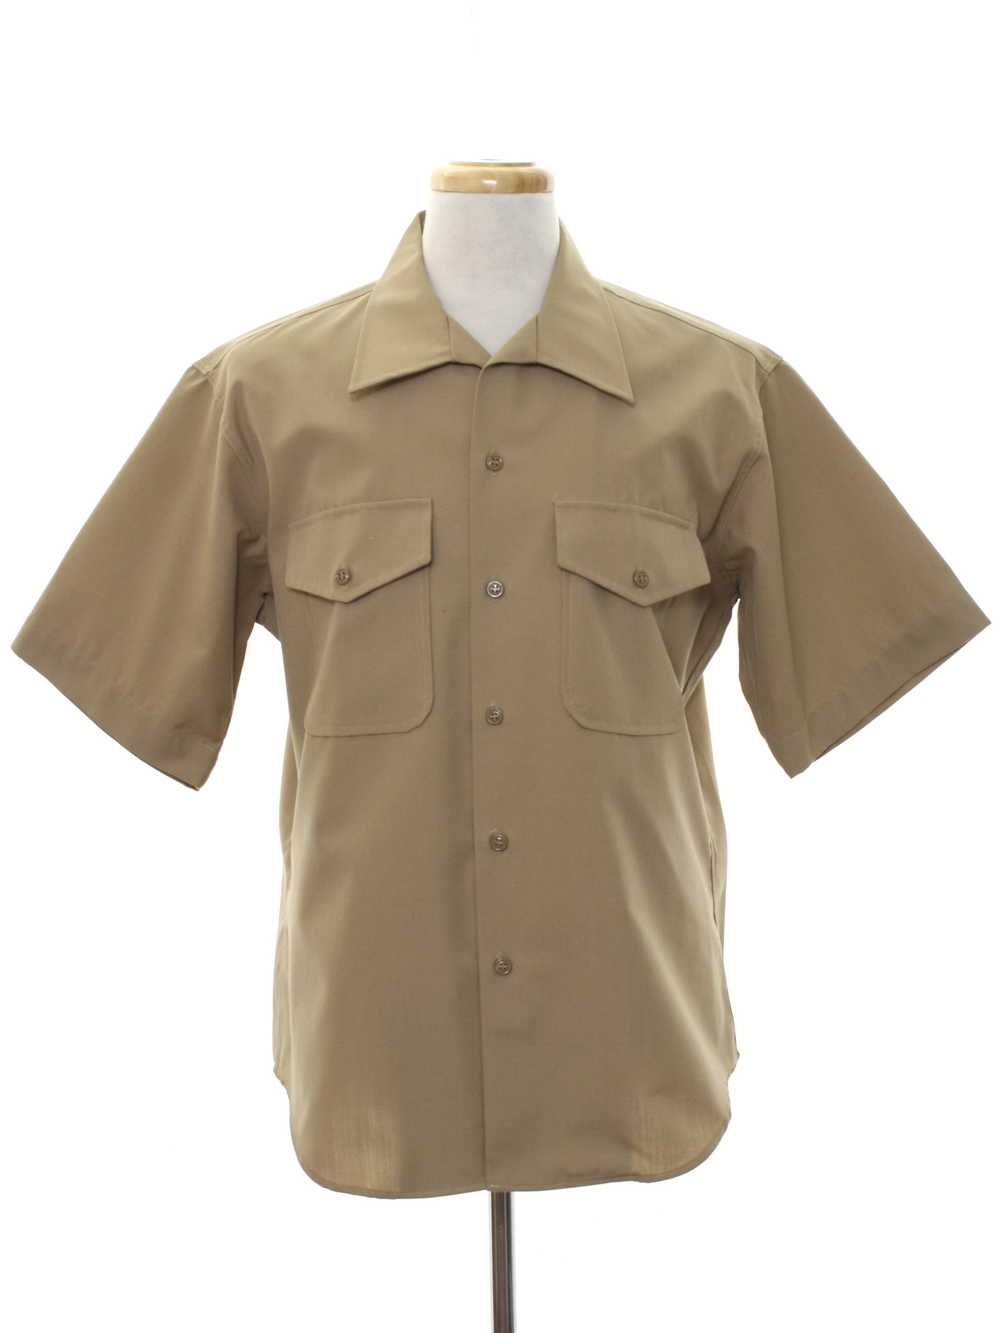 1960's Arrow Mens Uniform Shirt - image 1